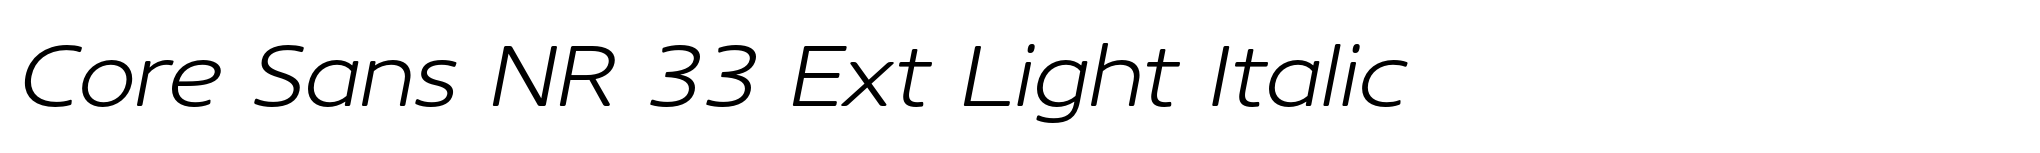 Core Sans NR 33 Ext Light Italic image